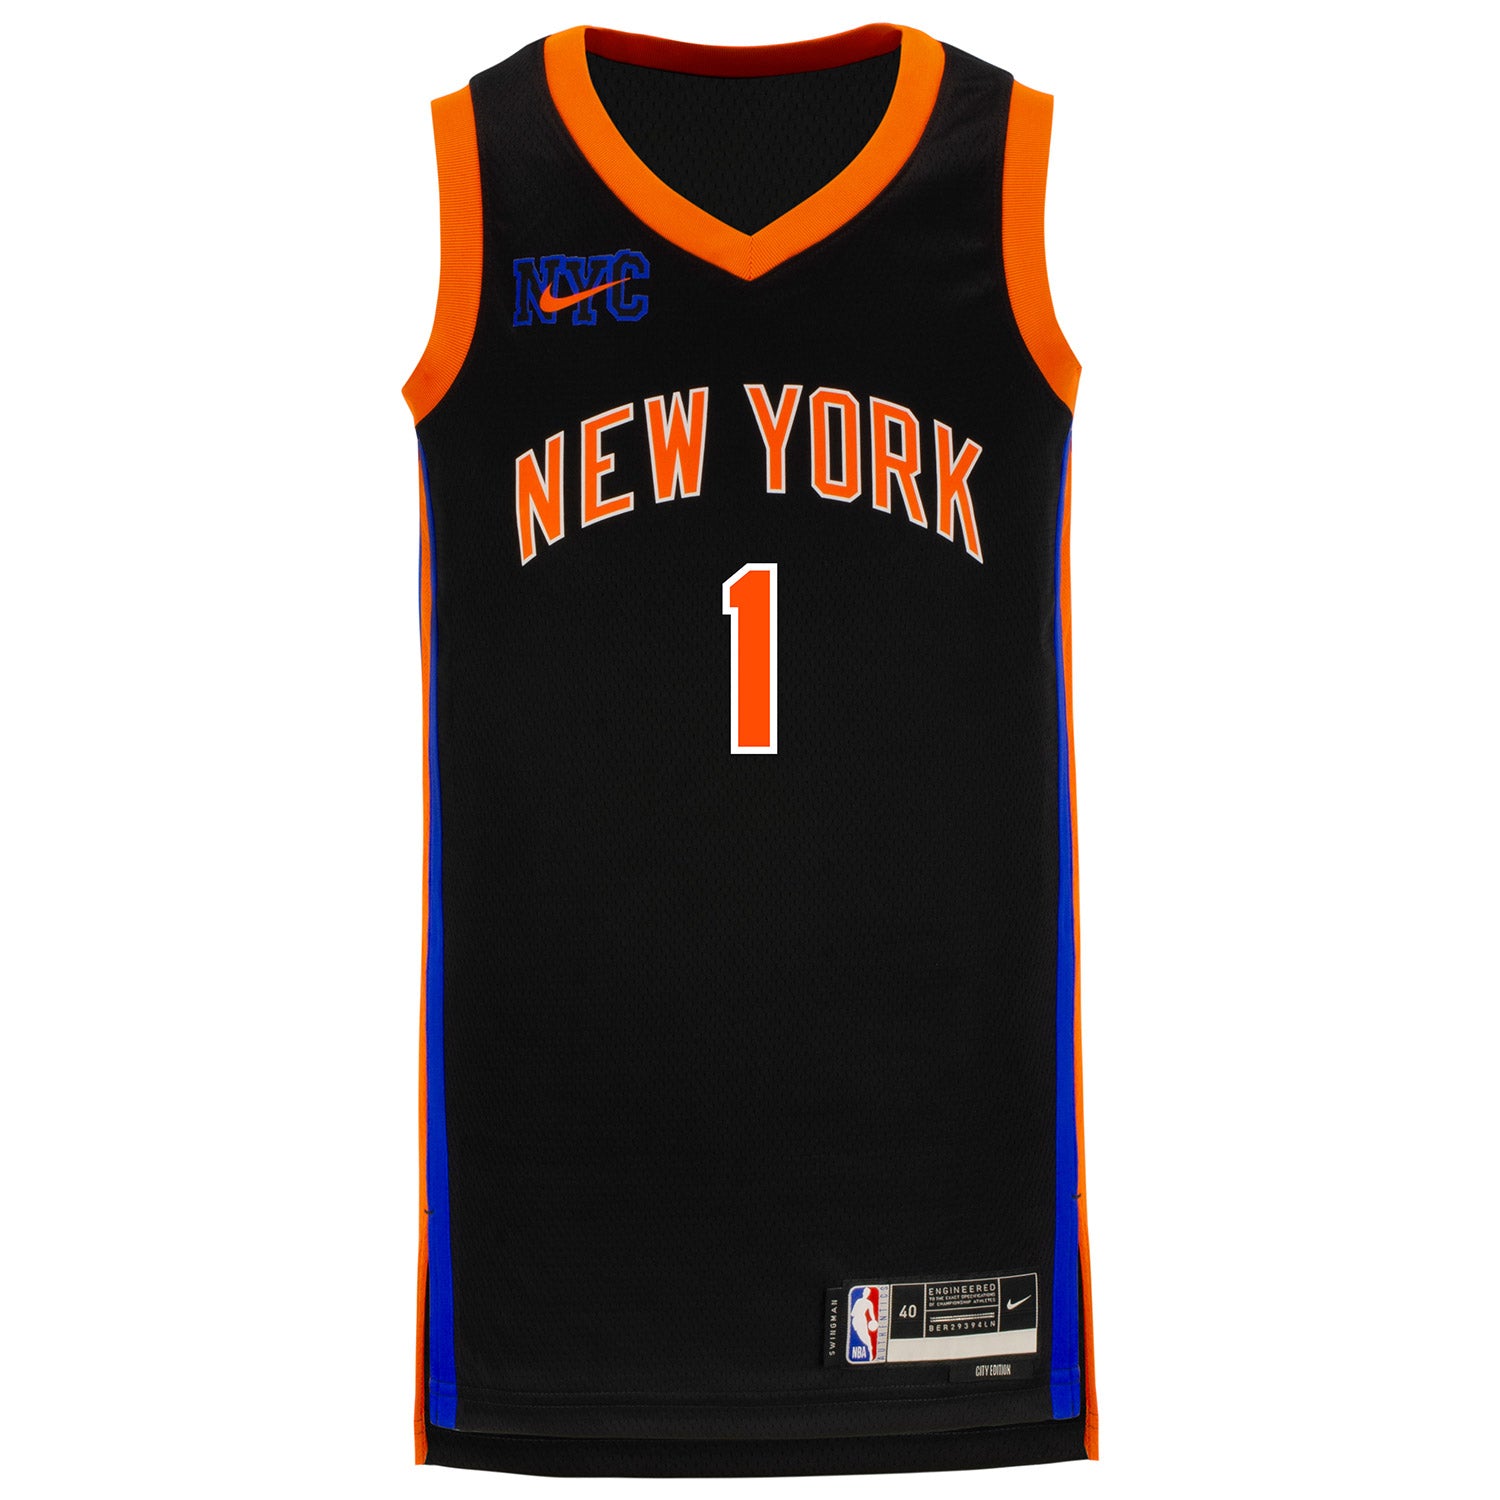 Knicks style – upperupper